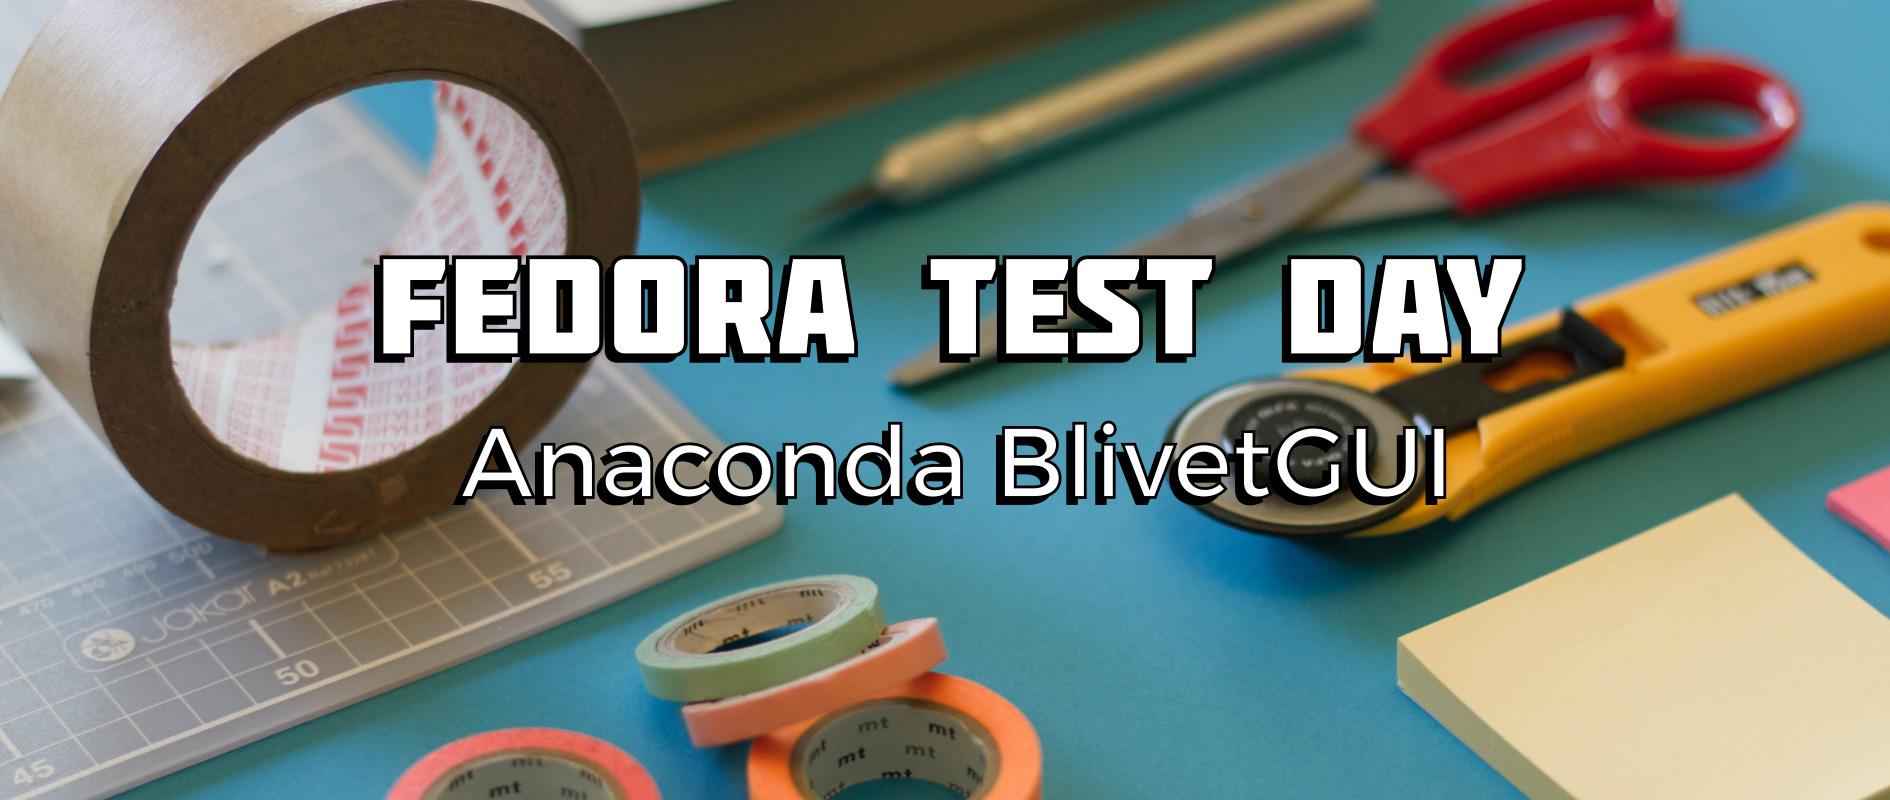 Anaconda BlivetGUI Test Day: 2017-04-06